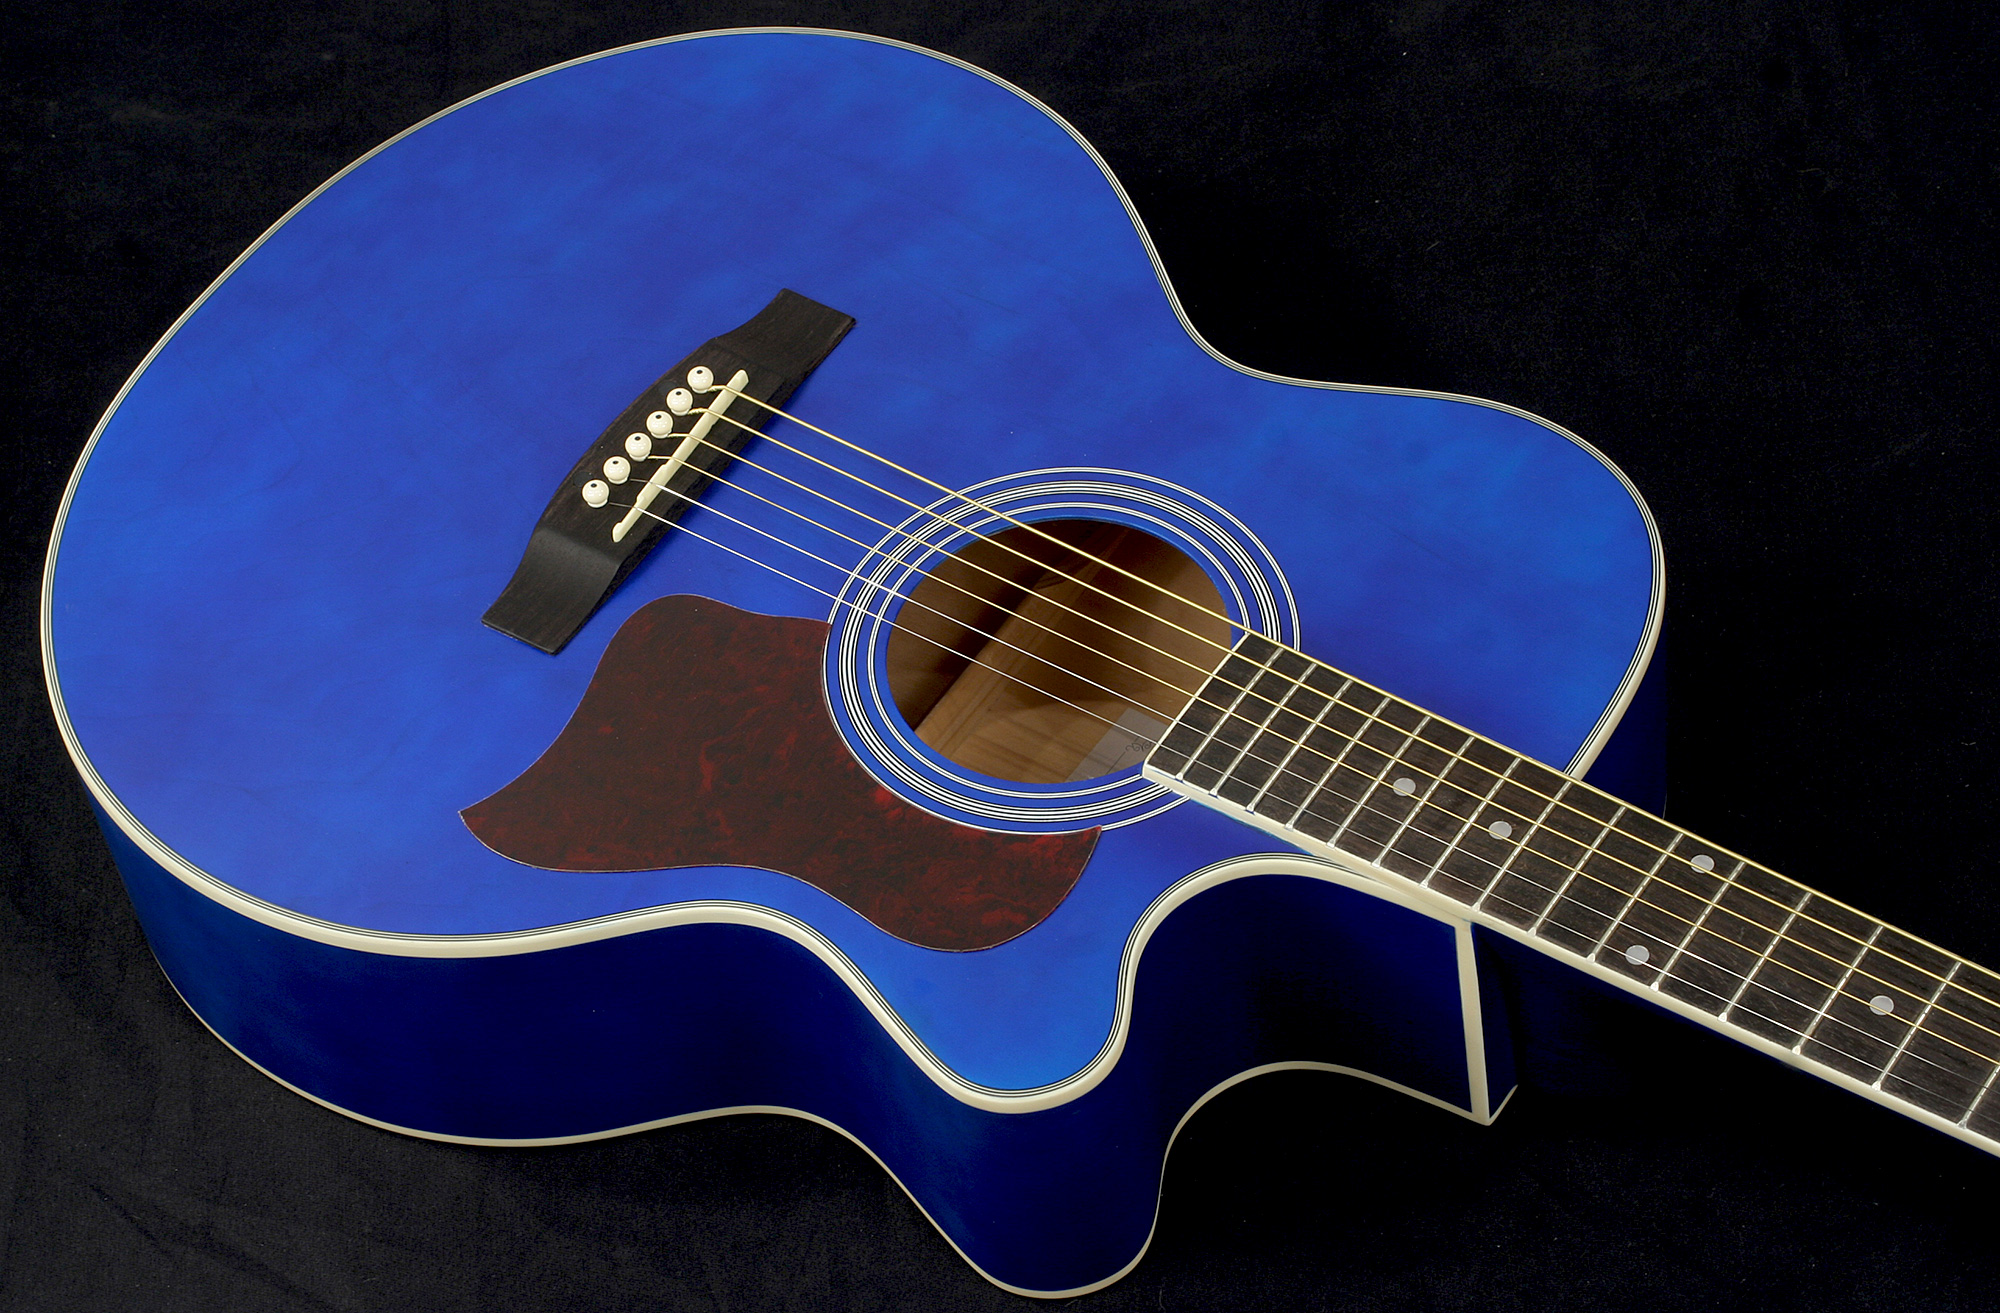 Eastone Sb20c-blu - Blue - Acoustic guitar & electro - Variation 1